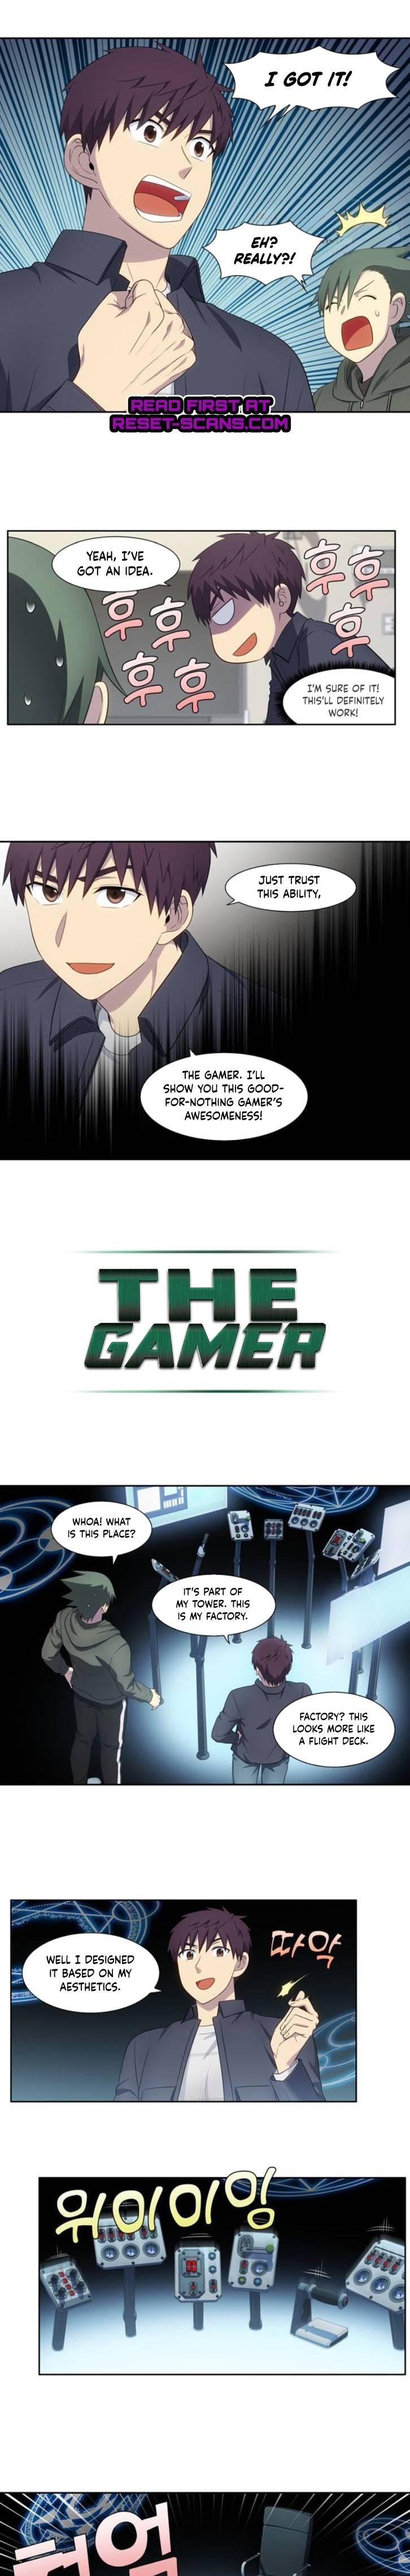 The Gamer - episode 384 - 2